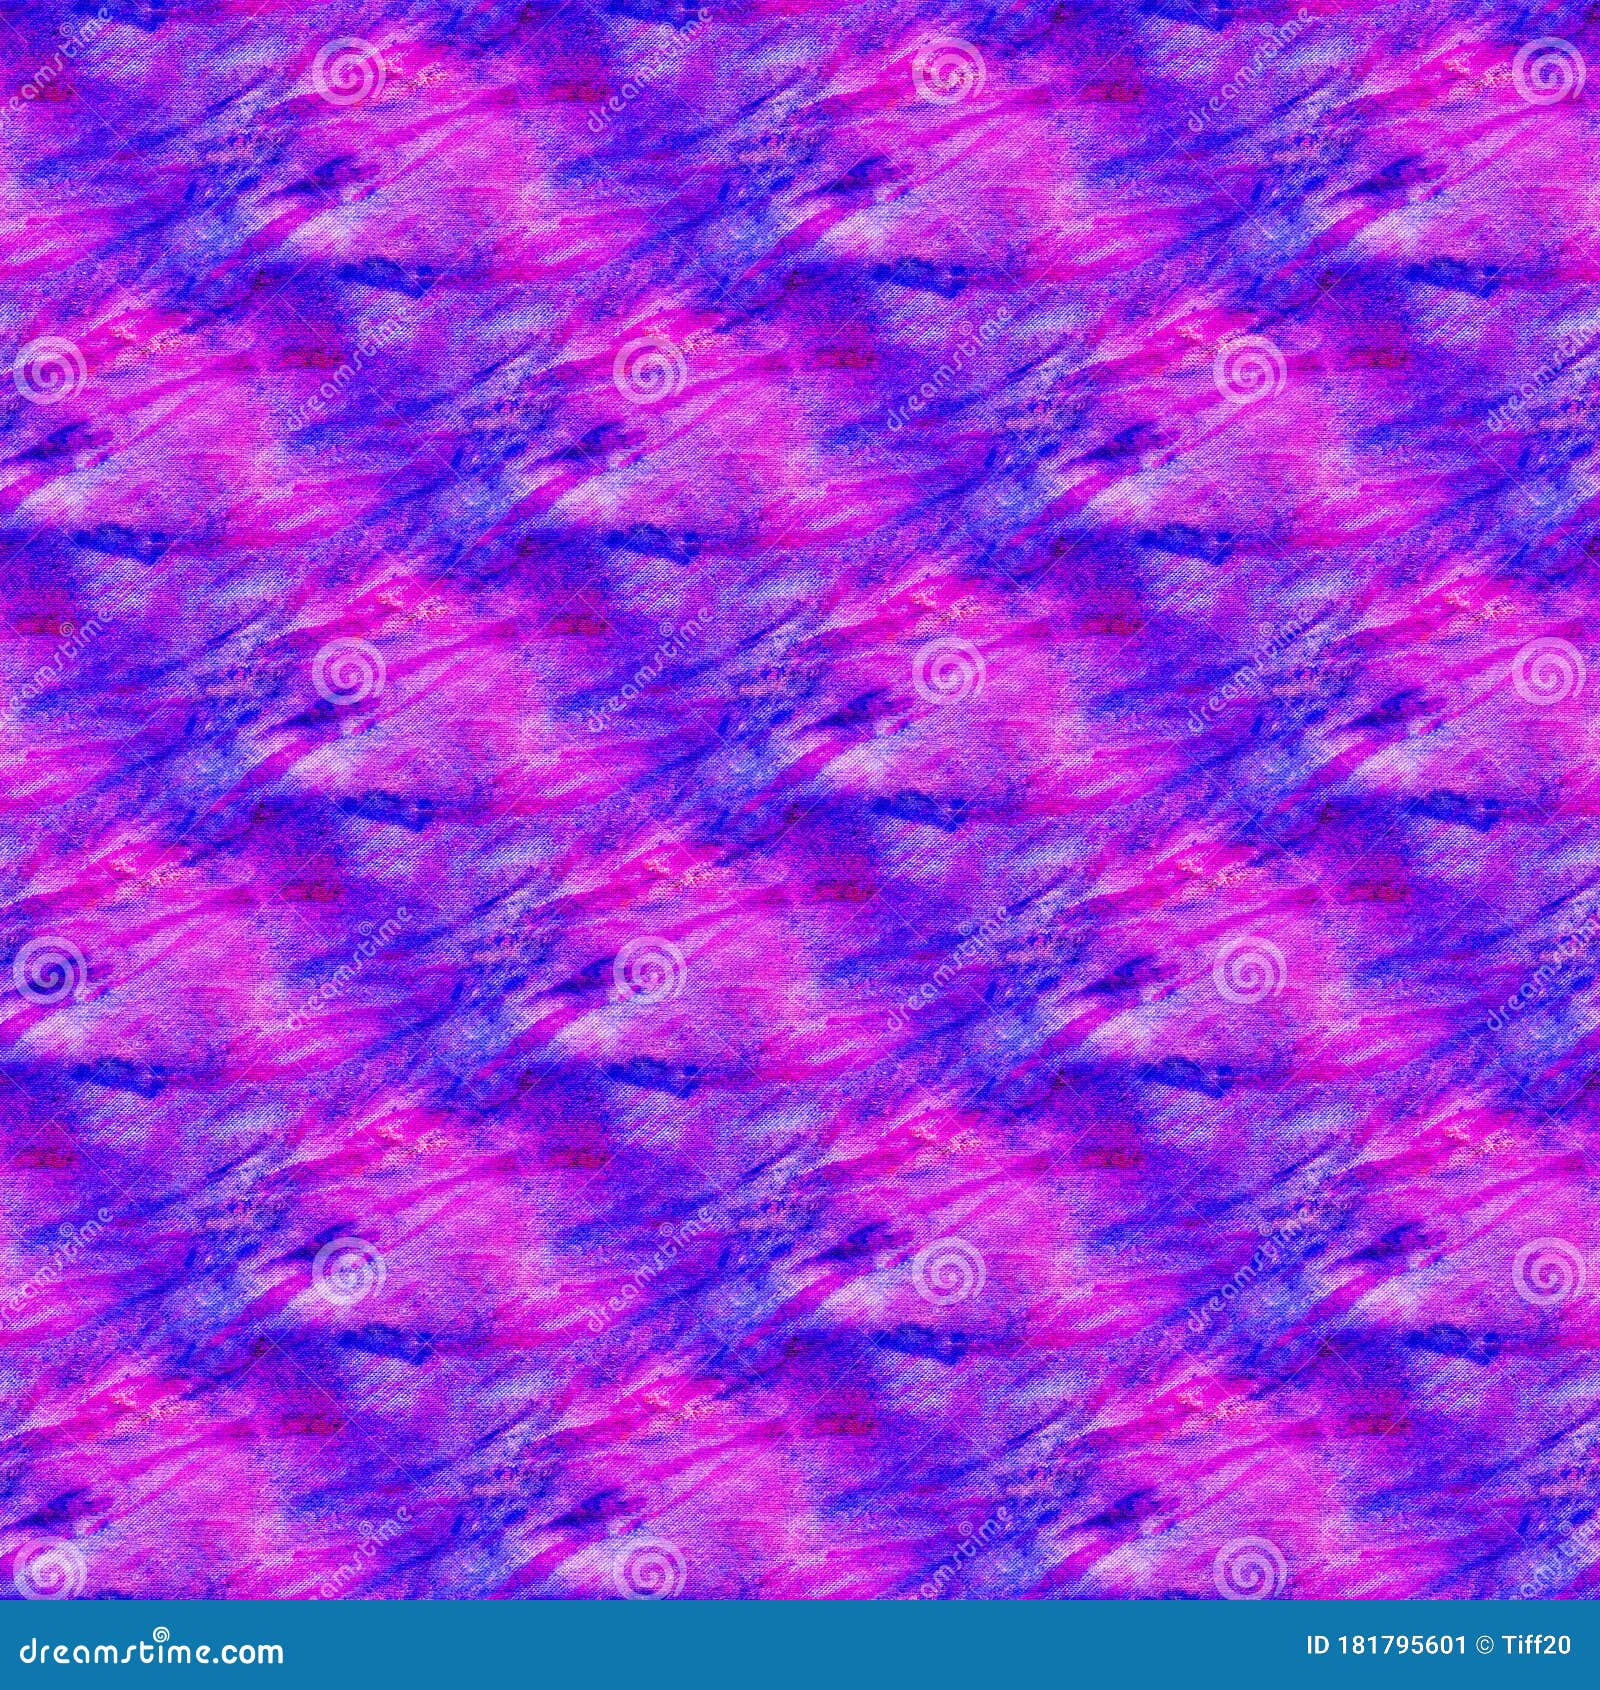 Tie Dye Background stock illustration. Illustration of pattern - 181795601